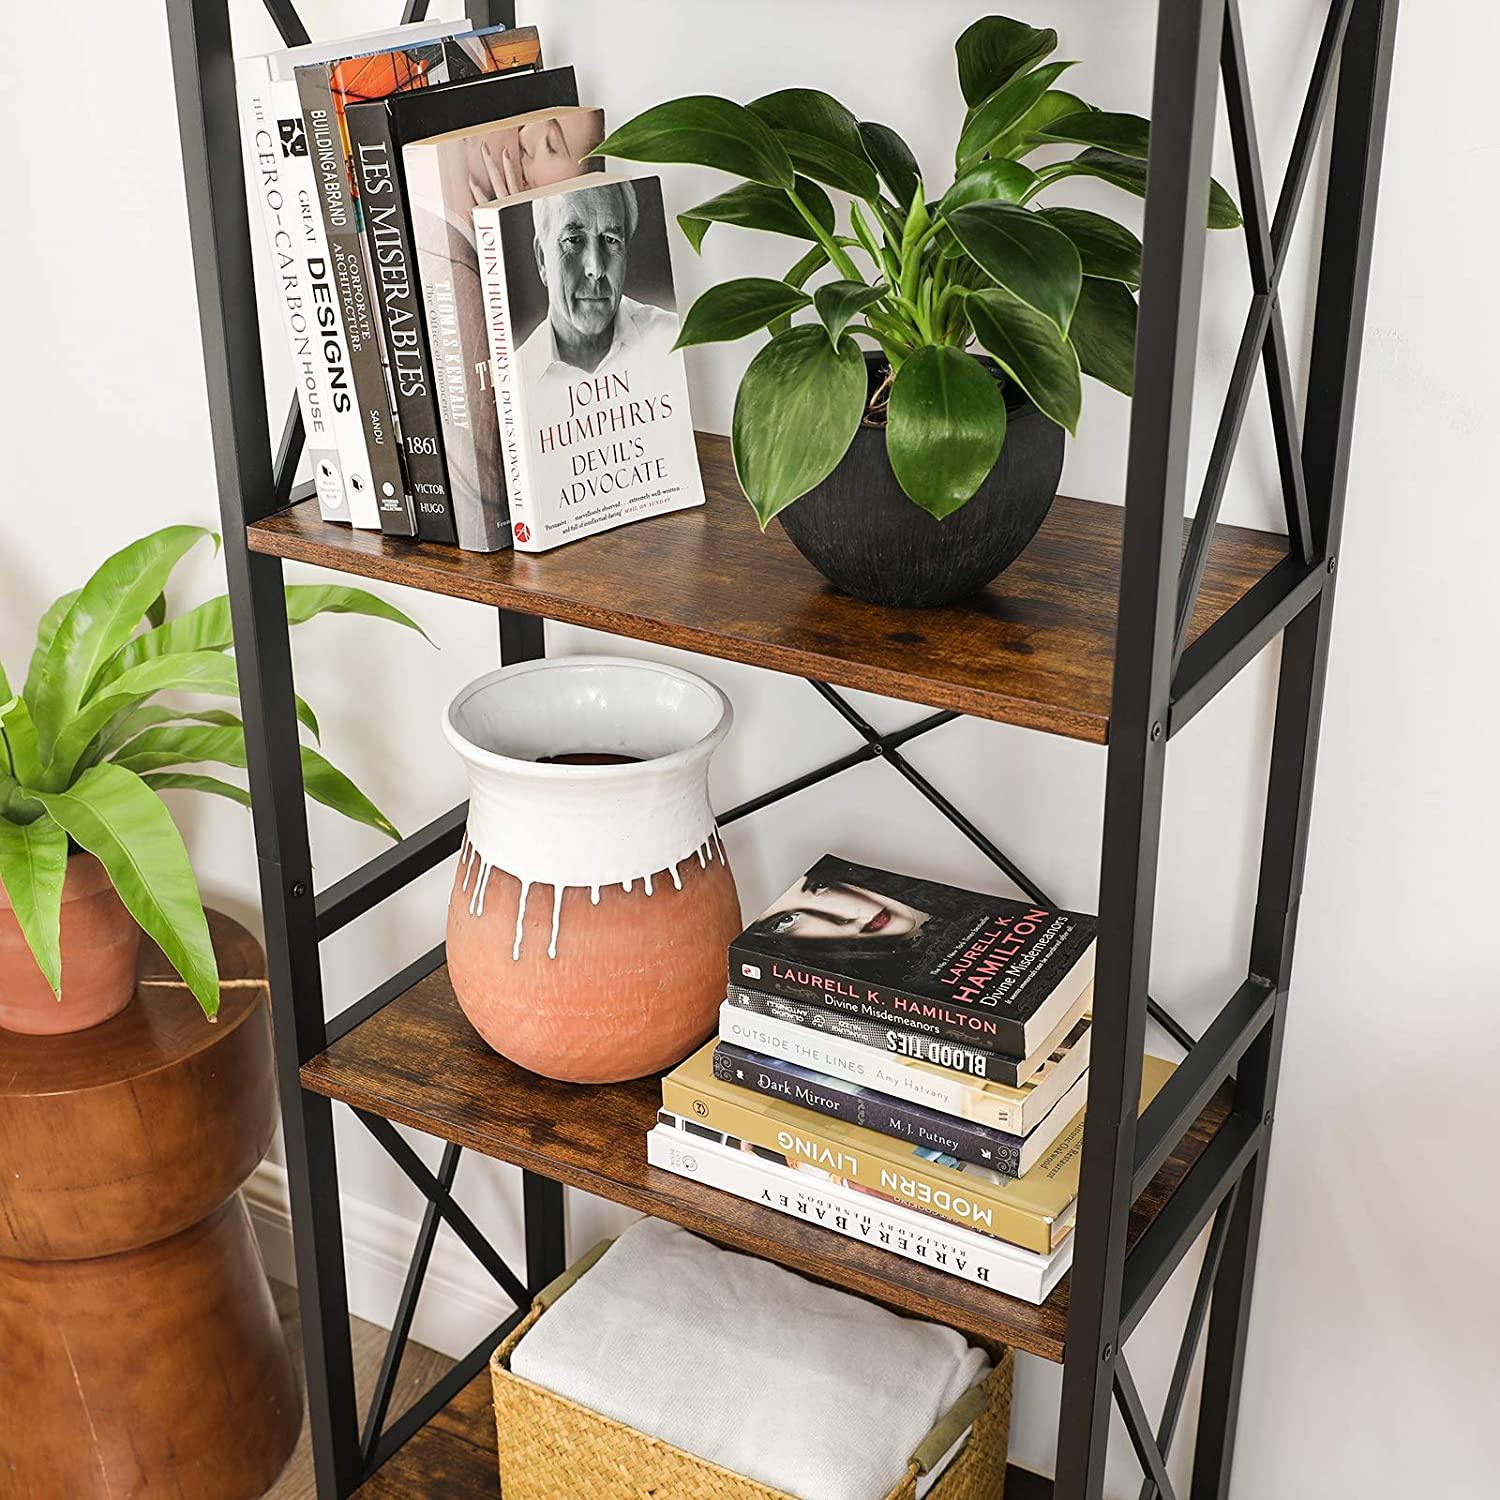 Bookshelf, Kitchen Shelf, Free Standing Shelf RAW58.dk 